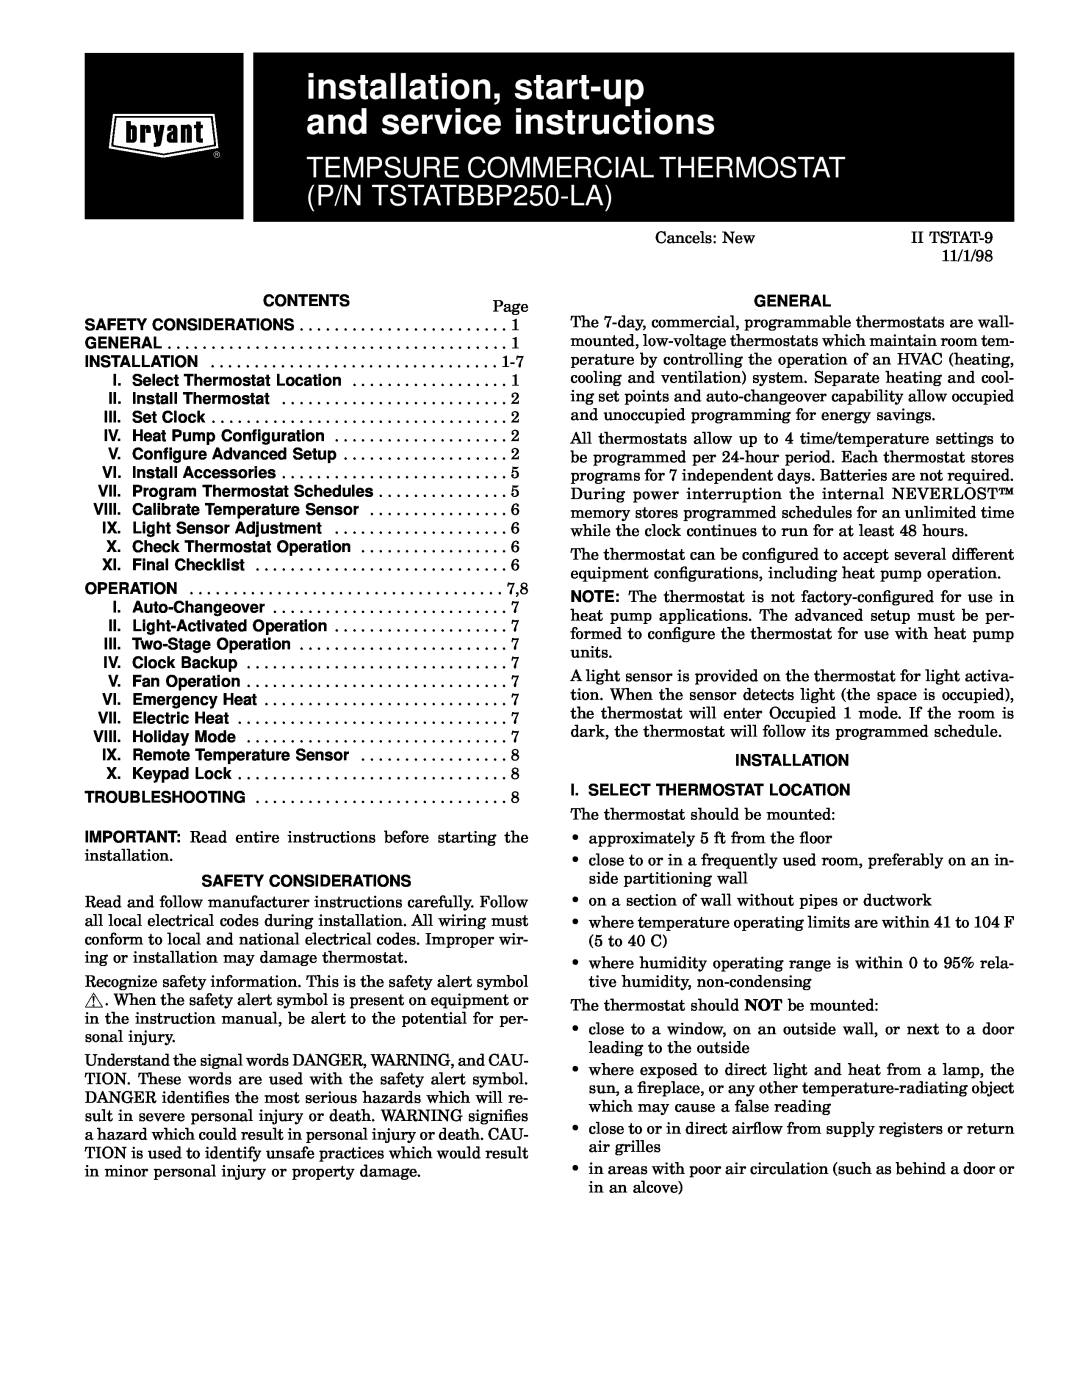 Bryant TSTATBBP250-LA instruction manual Contents, VII. Program Thermostat Schedules, VIII. Calibrate Temperature Sensor 